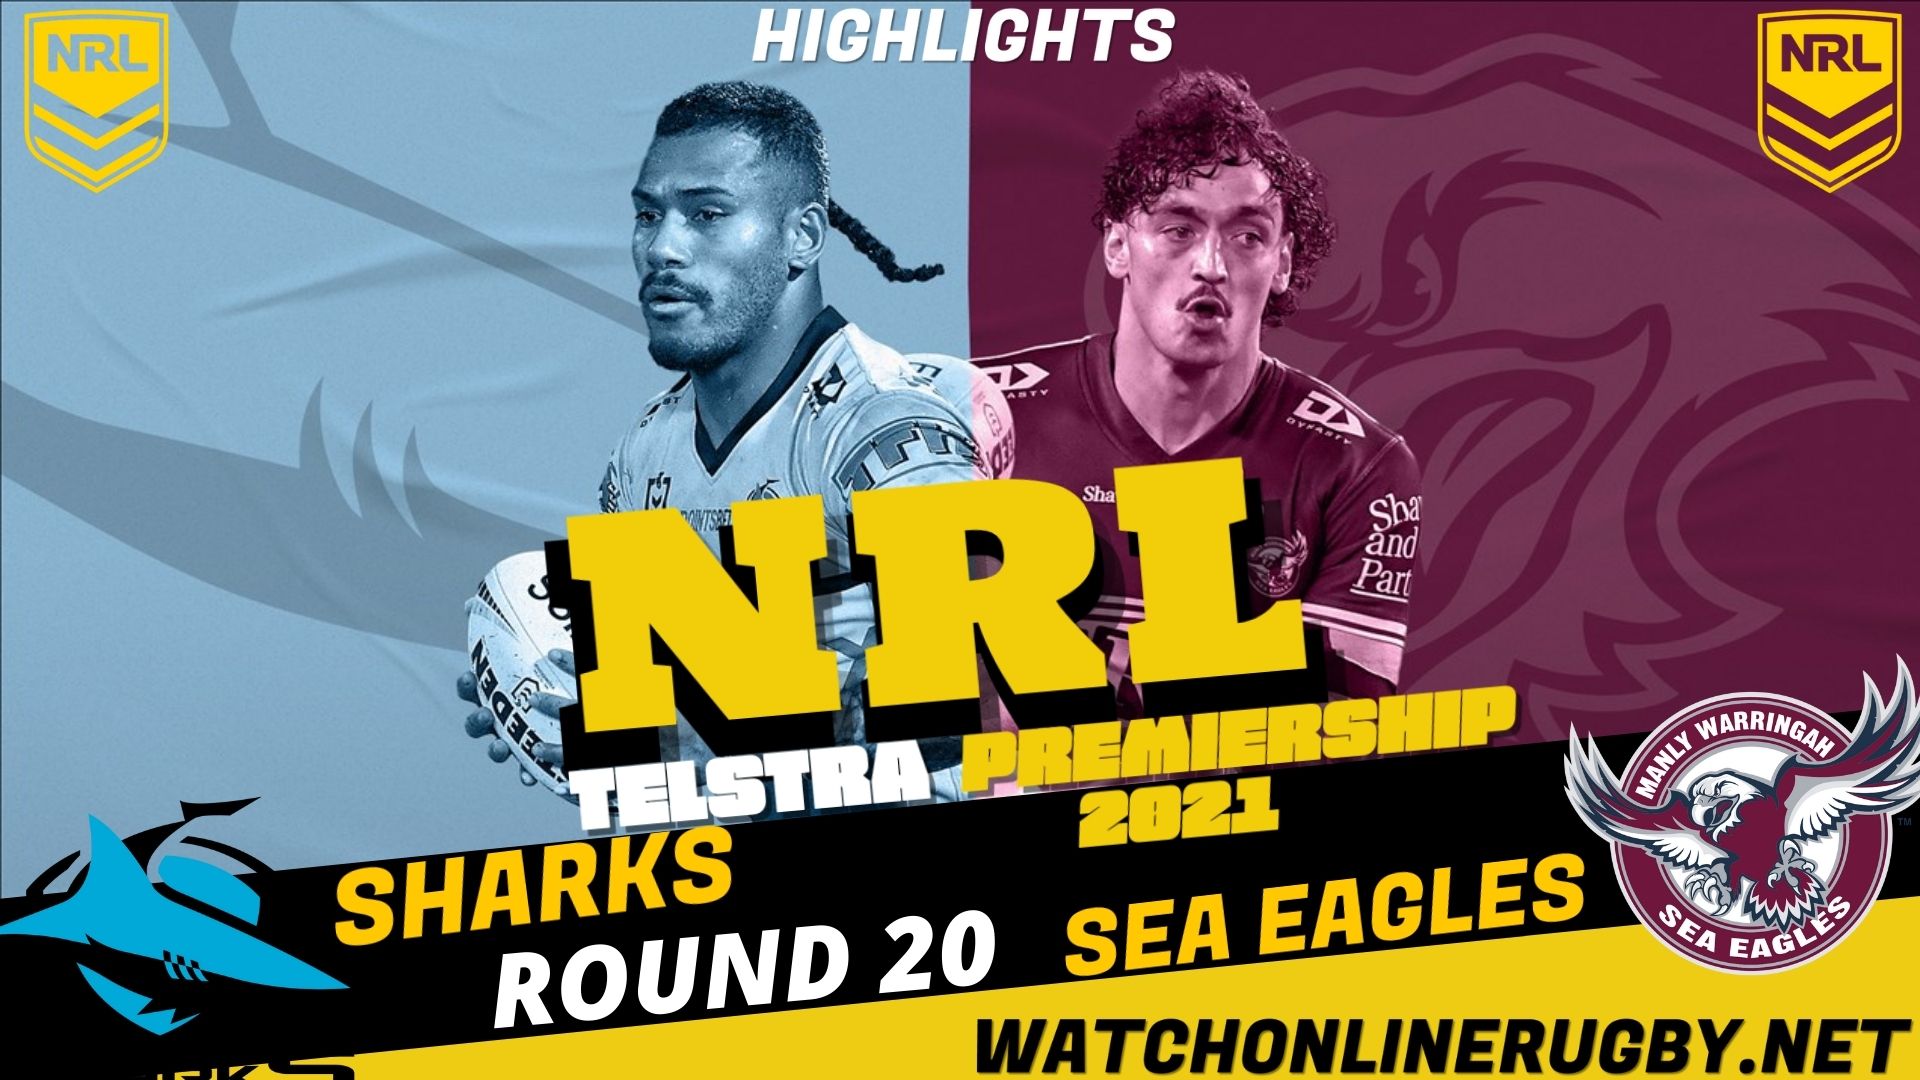 Sharks Vs Sea Eagles Highlights RD 20 NRL Rugby